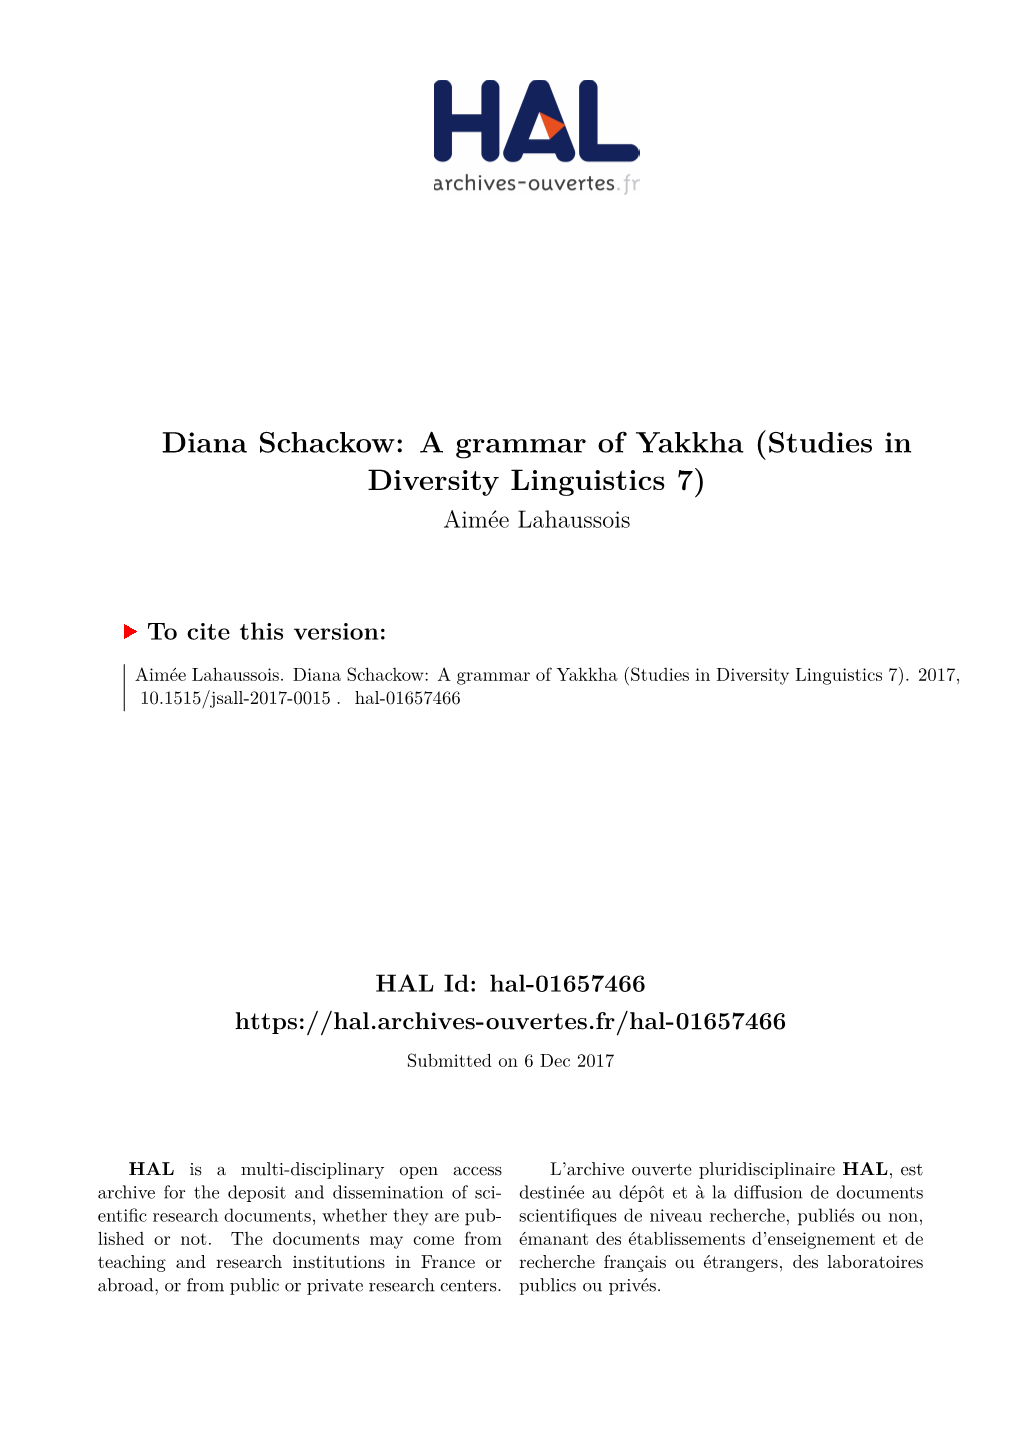 Diana Schackow: a Grammar of Yakkha (Studies in Diversity Linguistics 7) Aimée Lahaussois